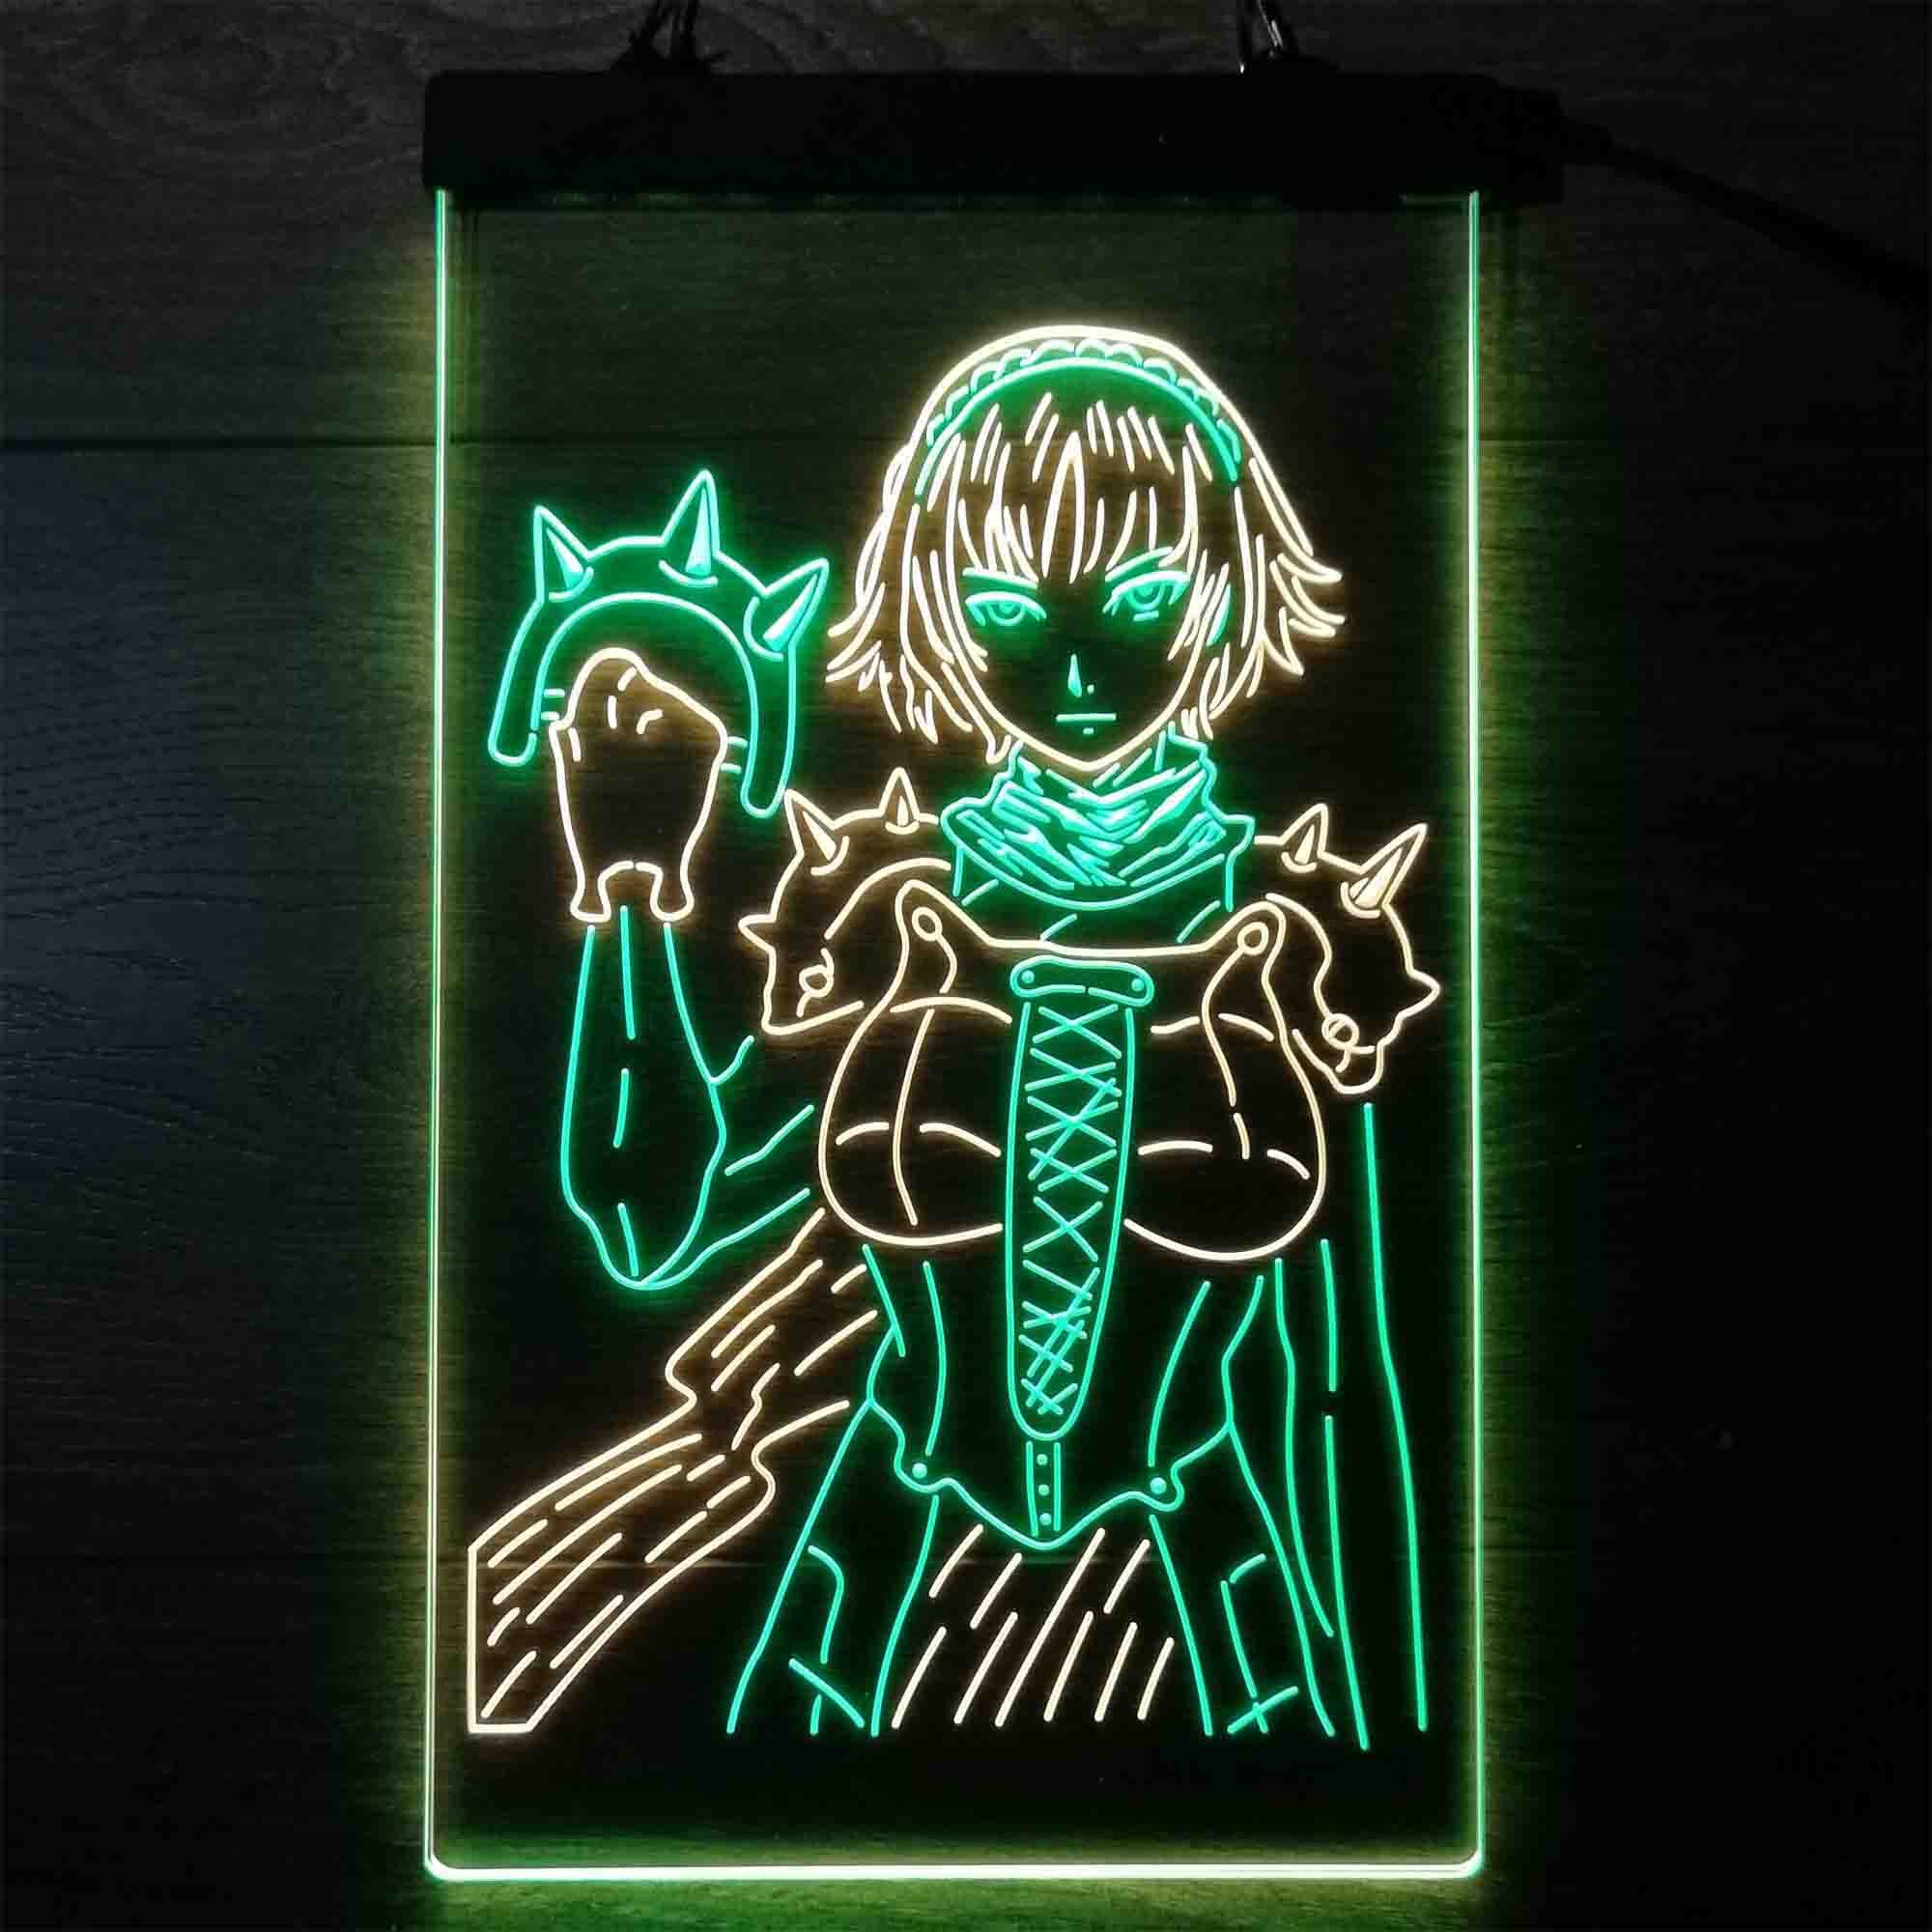 Makoto Persona 5 Led Neon Light Up Sign